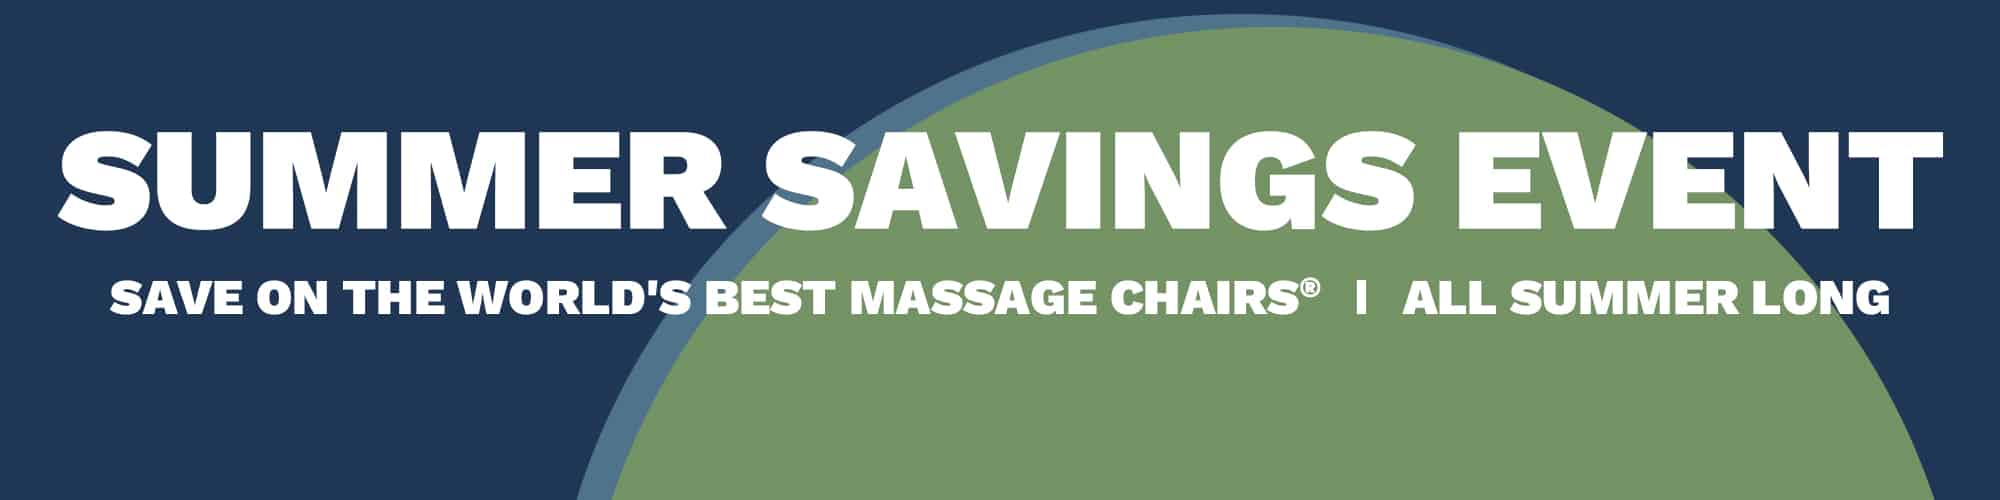 summer savings event - massage chair sale